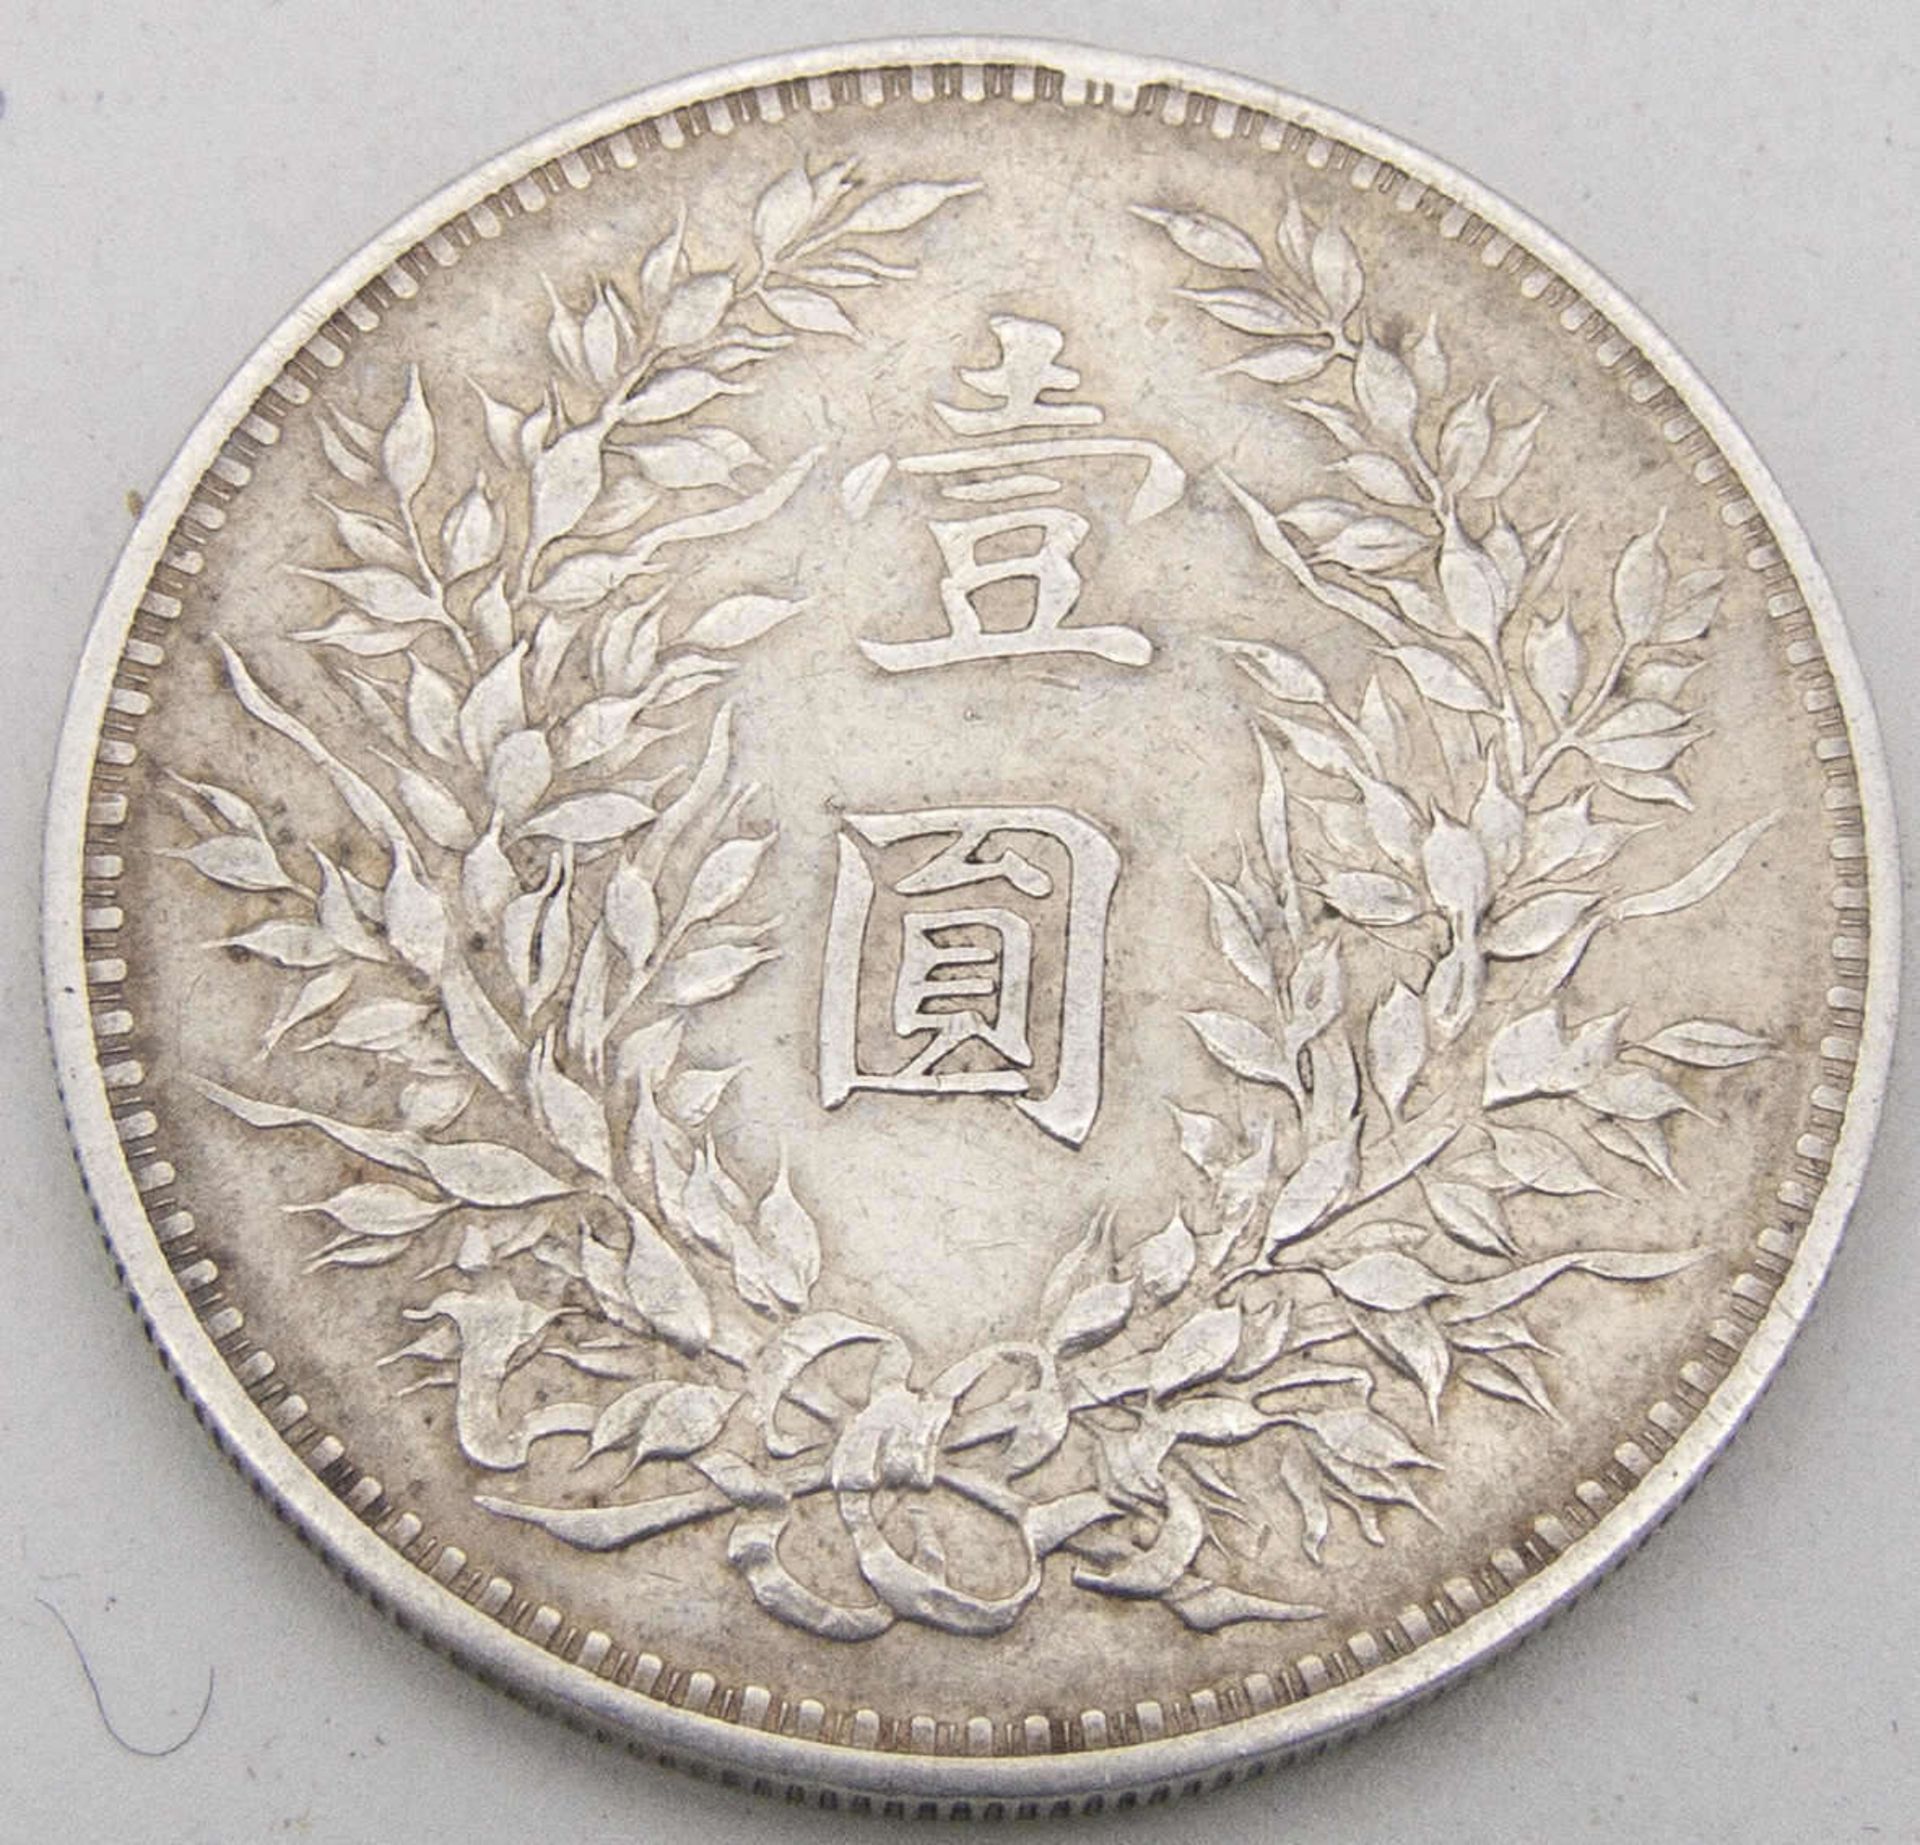 Republik China 1914, Dollar, Jahr 3, Yuan Shih - kai. Erhaltung: ss.Republic of China 1914, Dollars, - Bild 2 aus 2